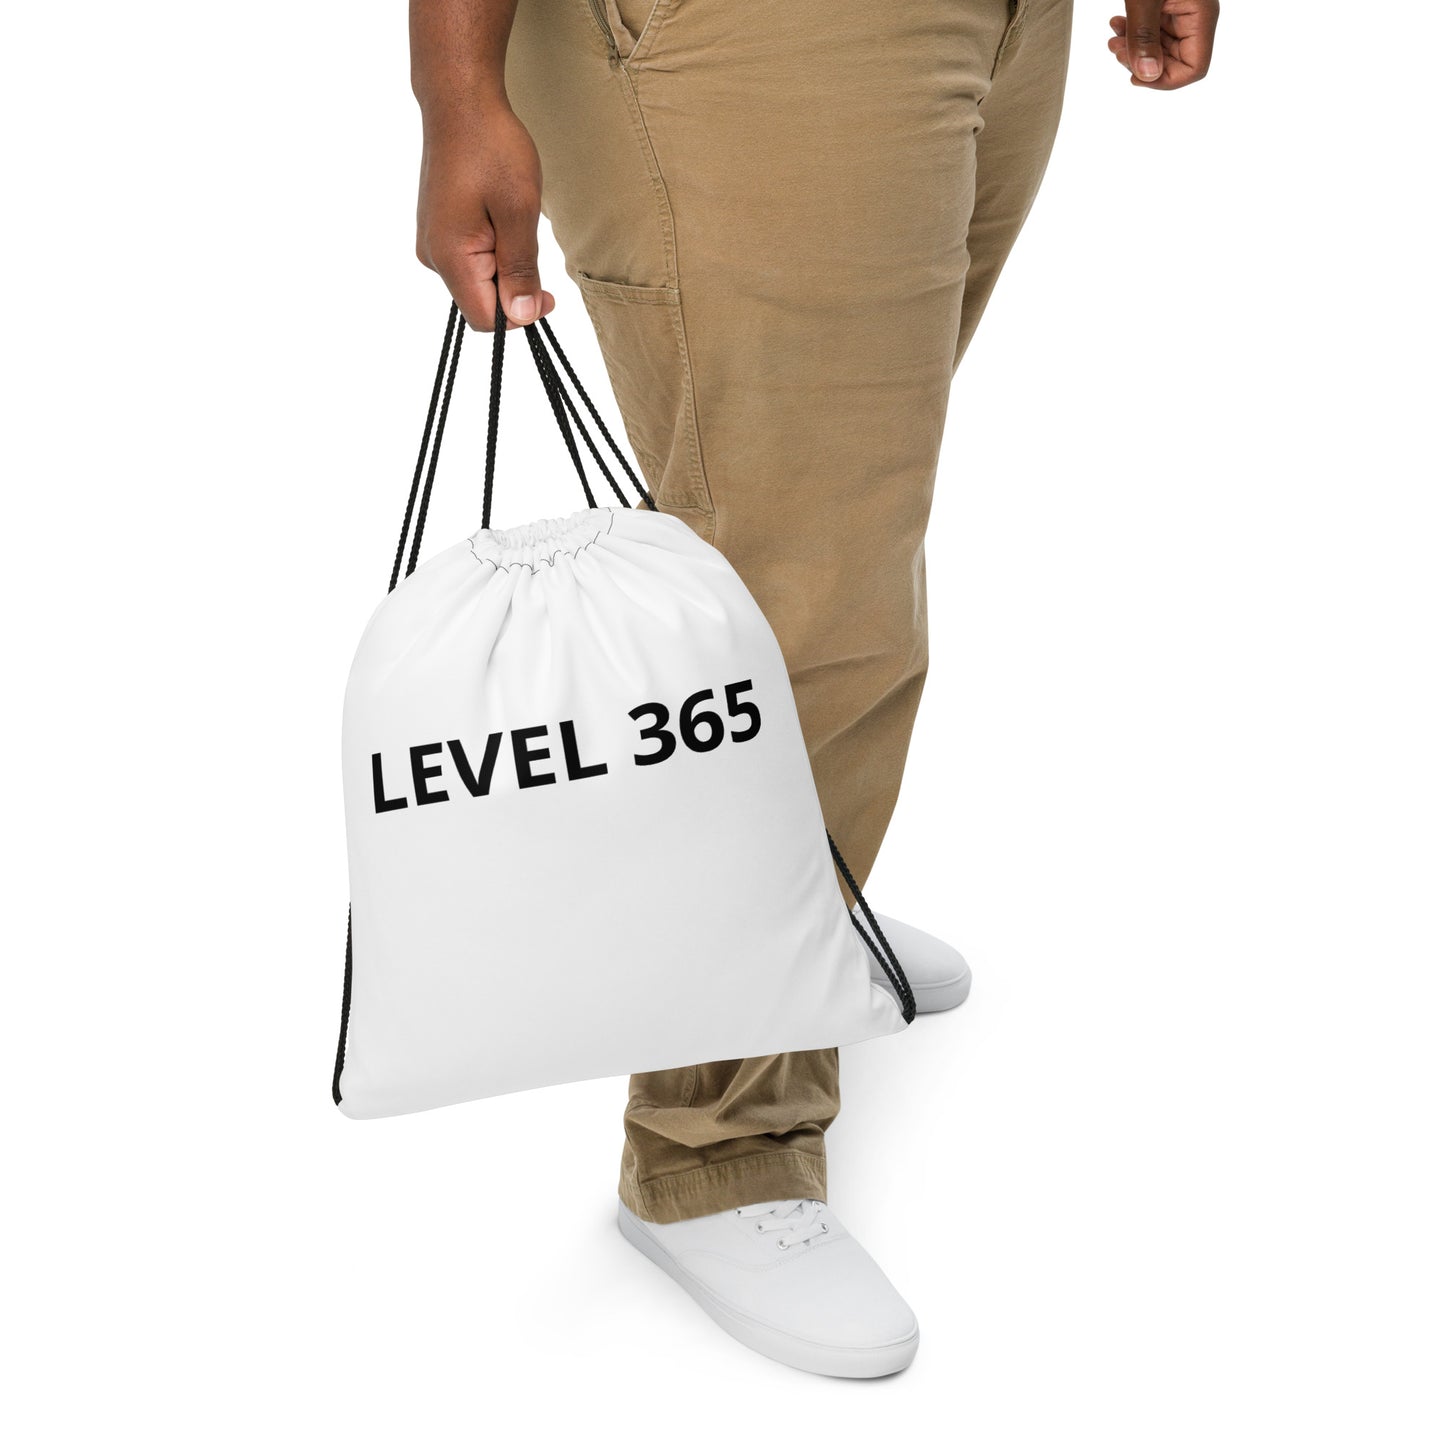 Level 365 Drawstring bag